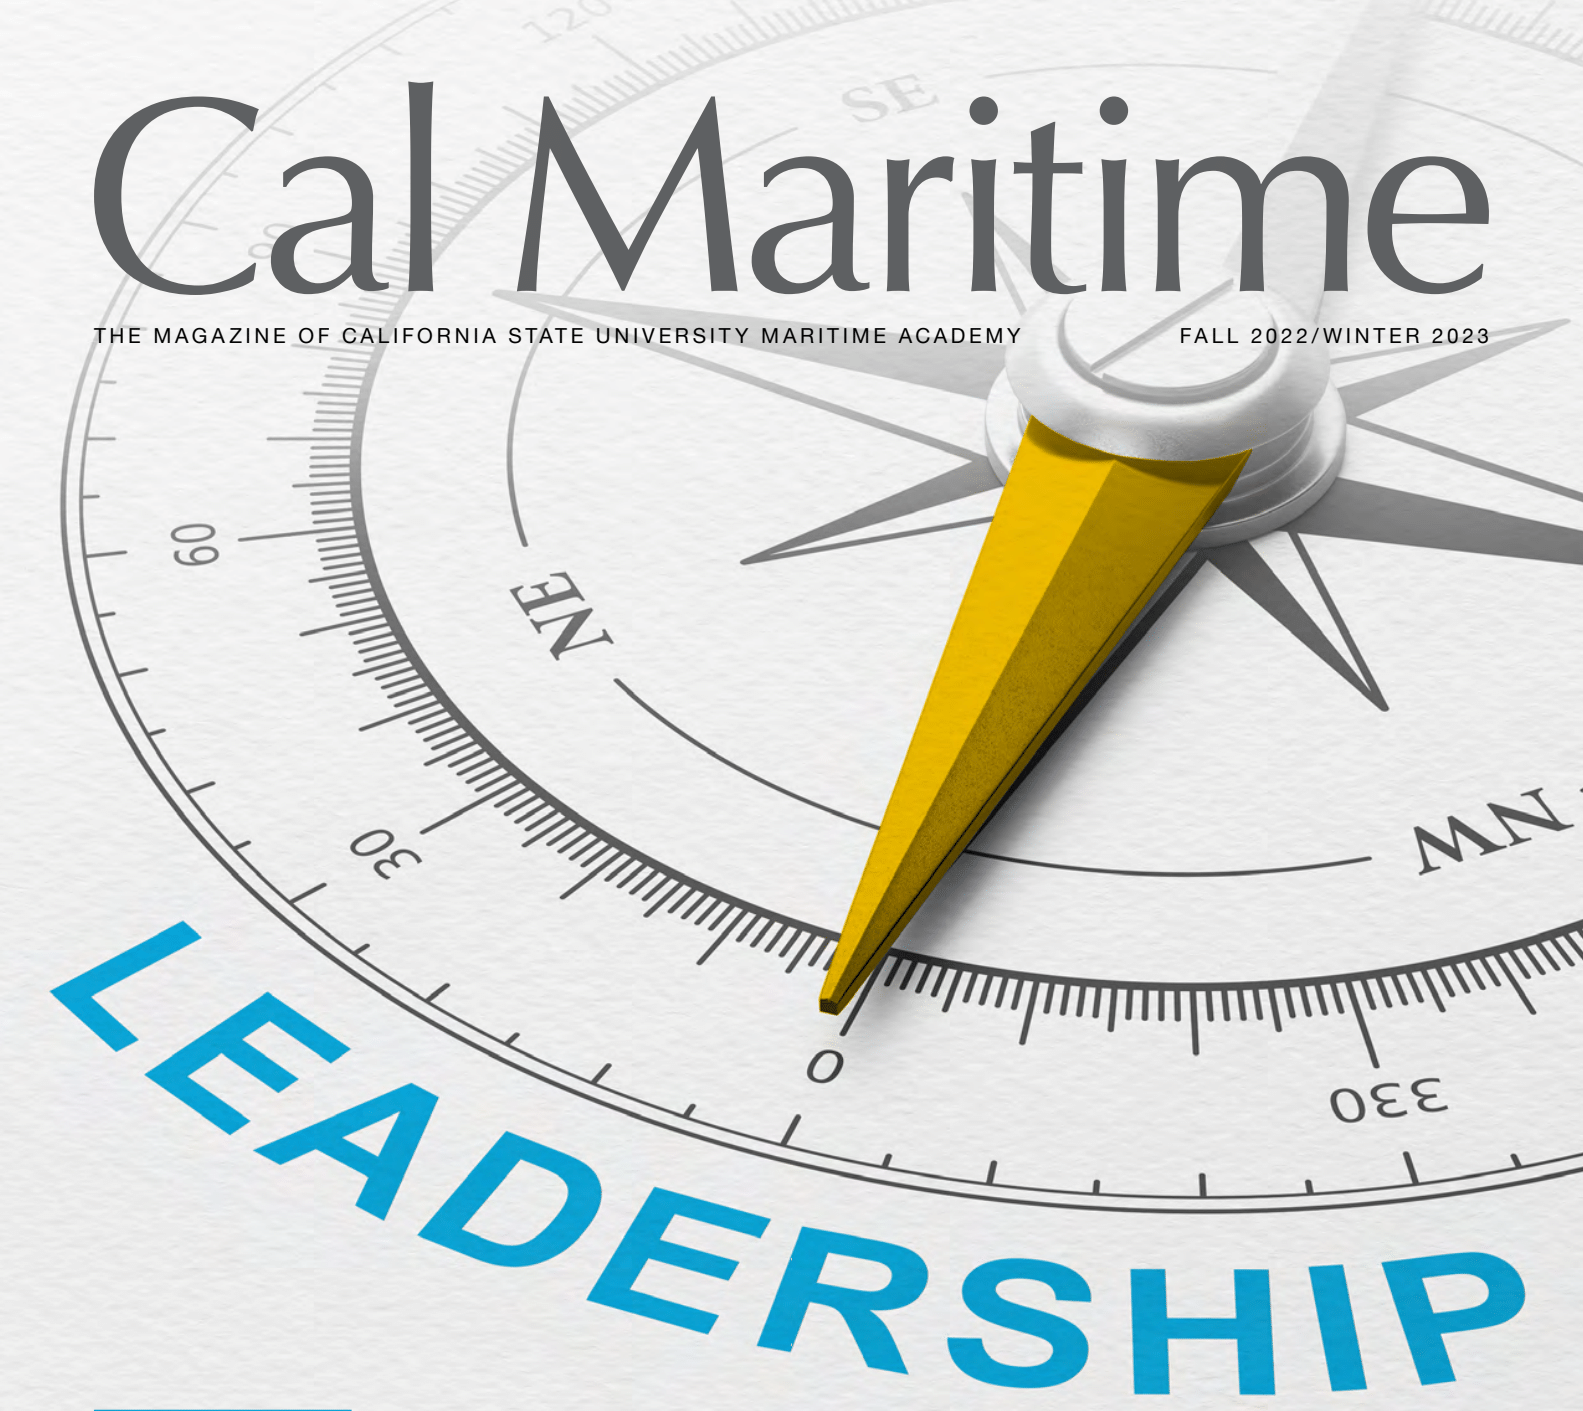 Cal Maritime's Fall 2022/Winter 2023 magazine 